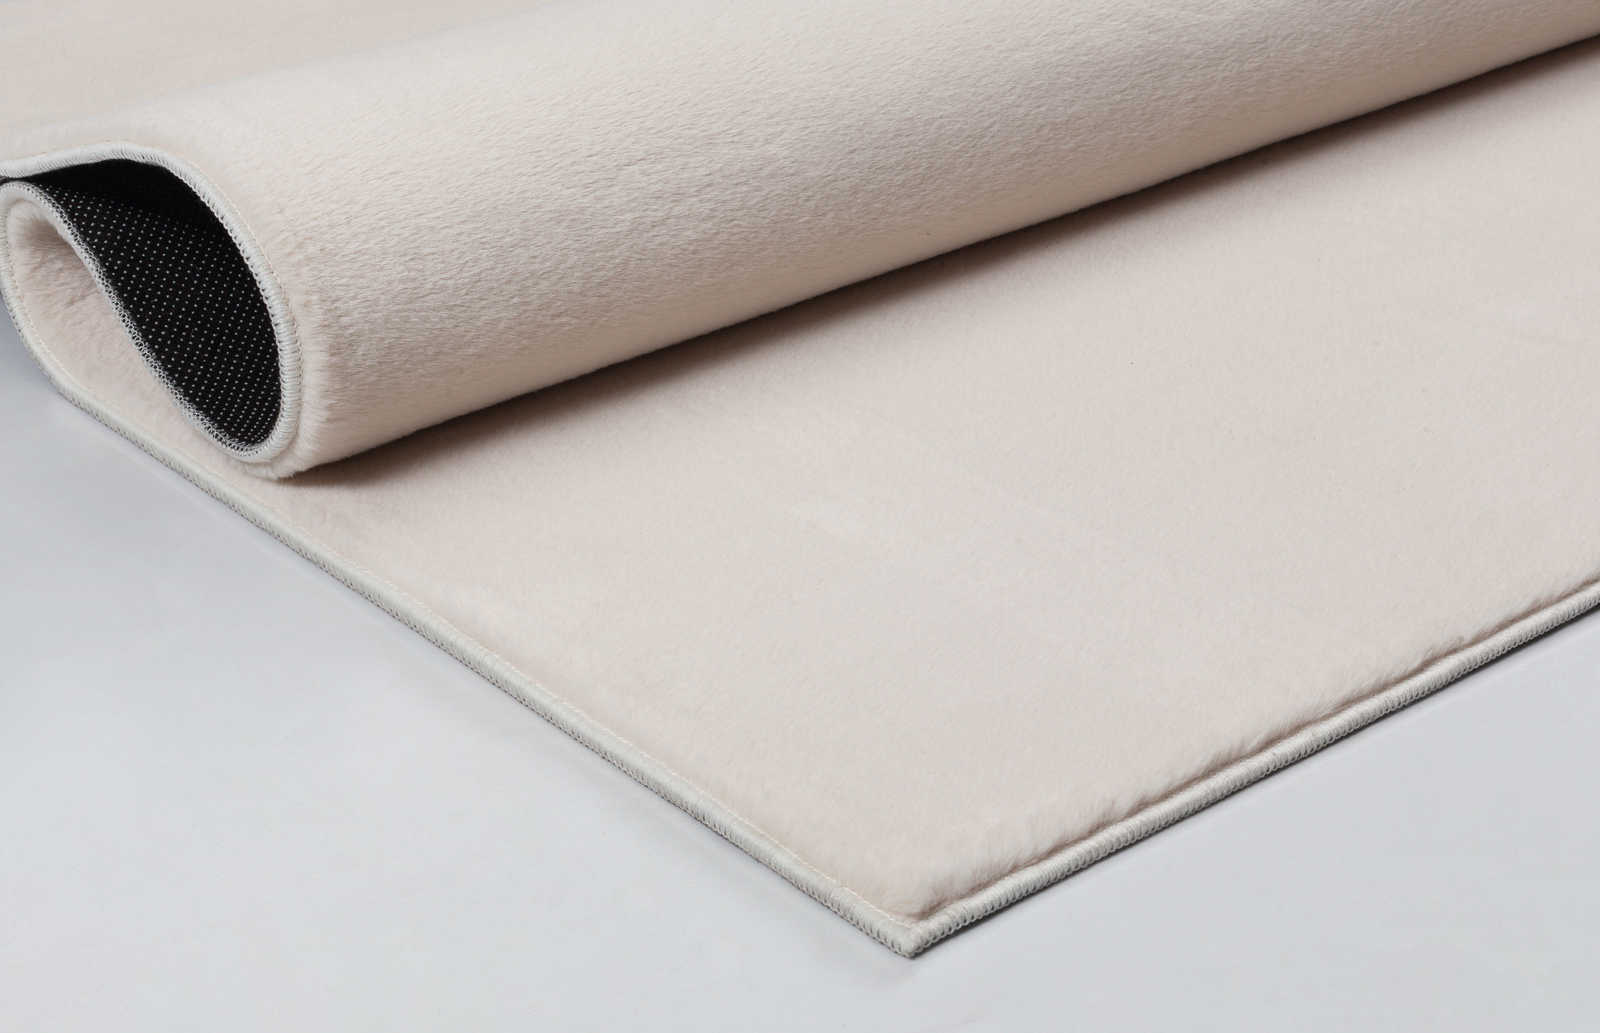             Plain high pile carpet in soft beige - 200 x 140 cm
        